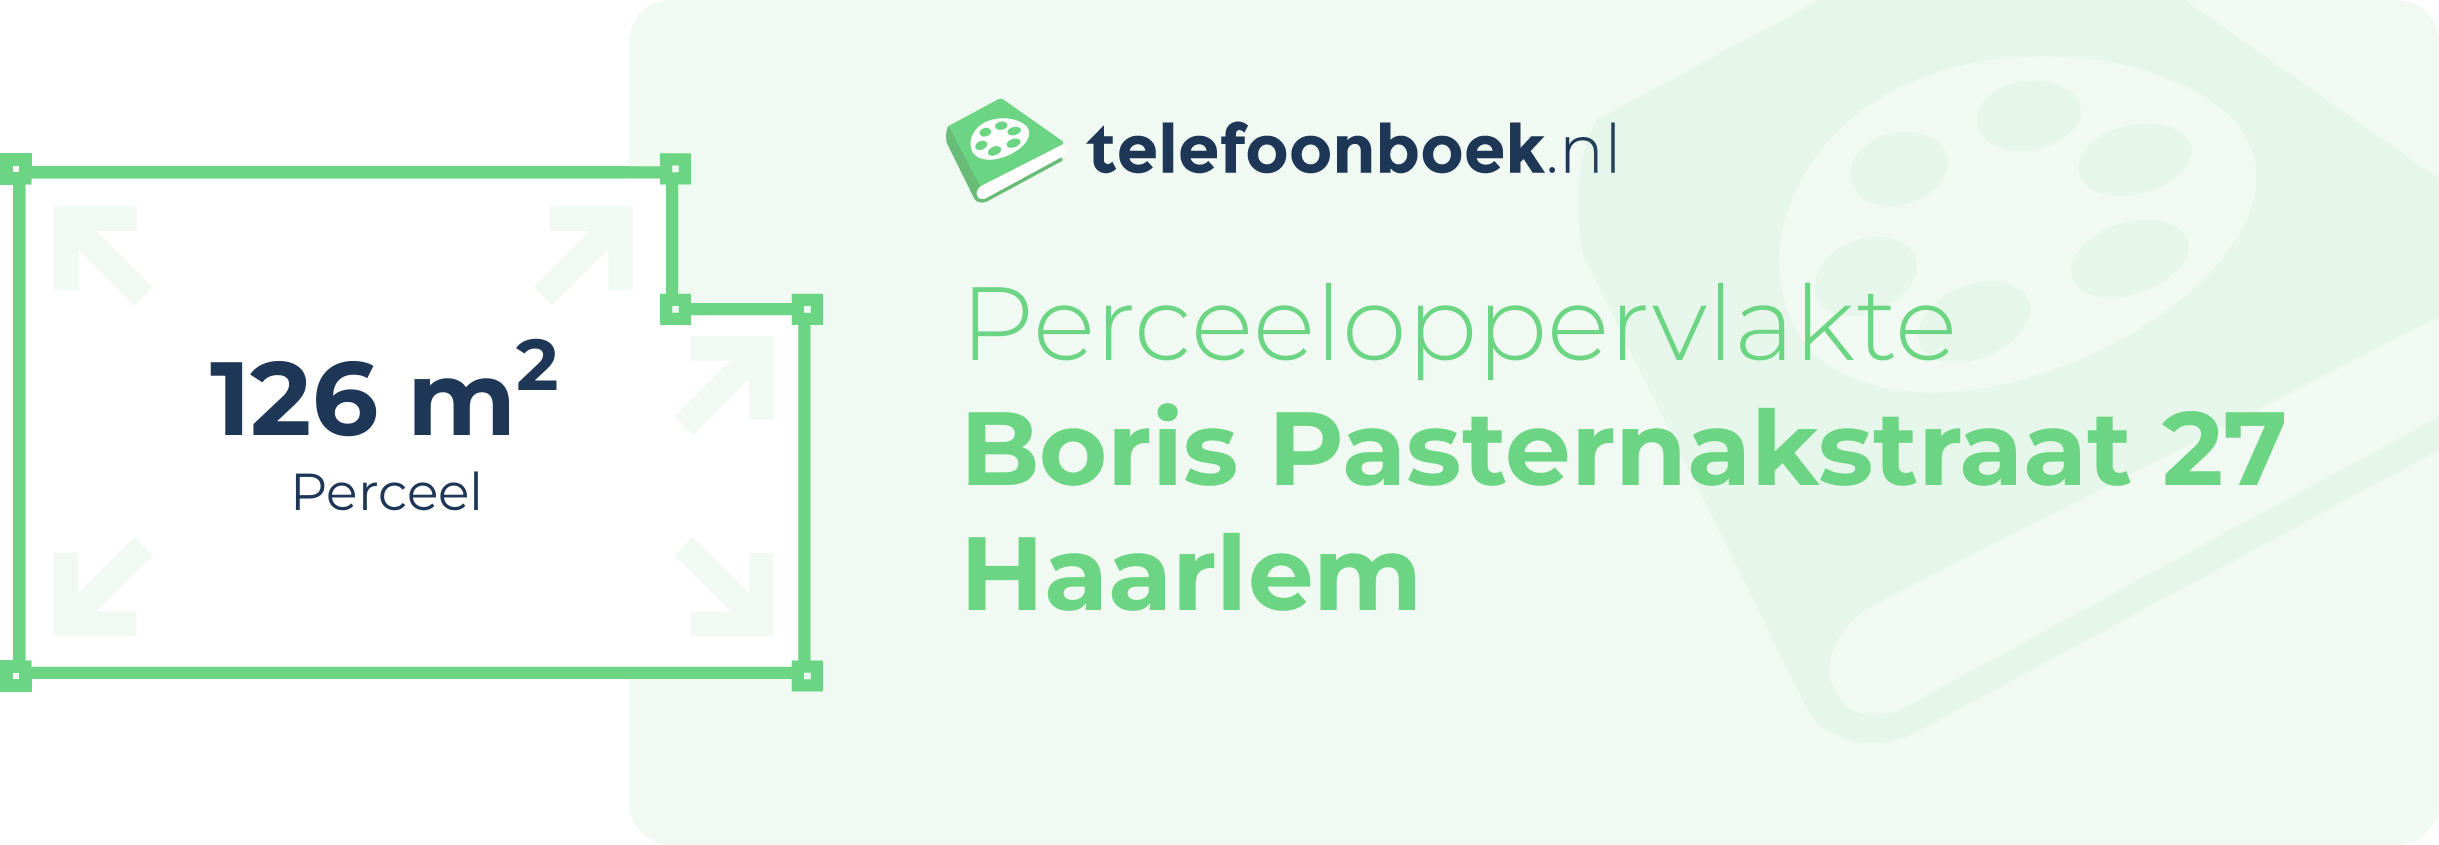 Perceeloppervlakte Boris Pasternakstraat 27 Haarlem